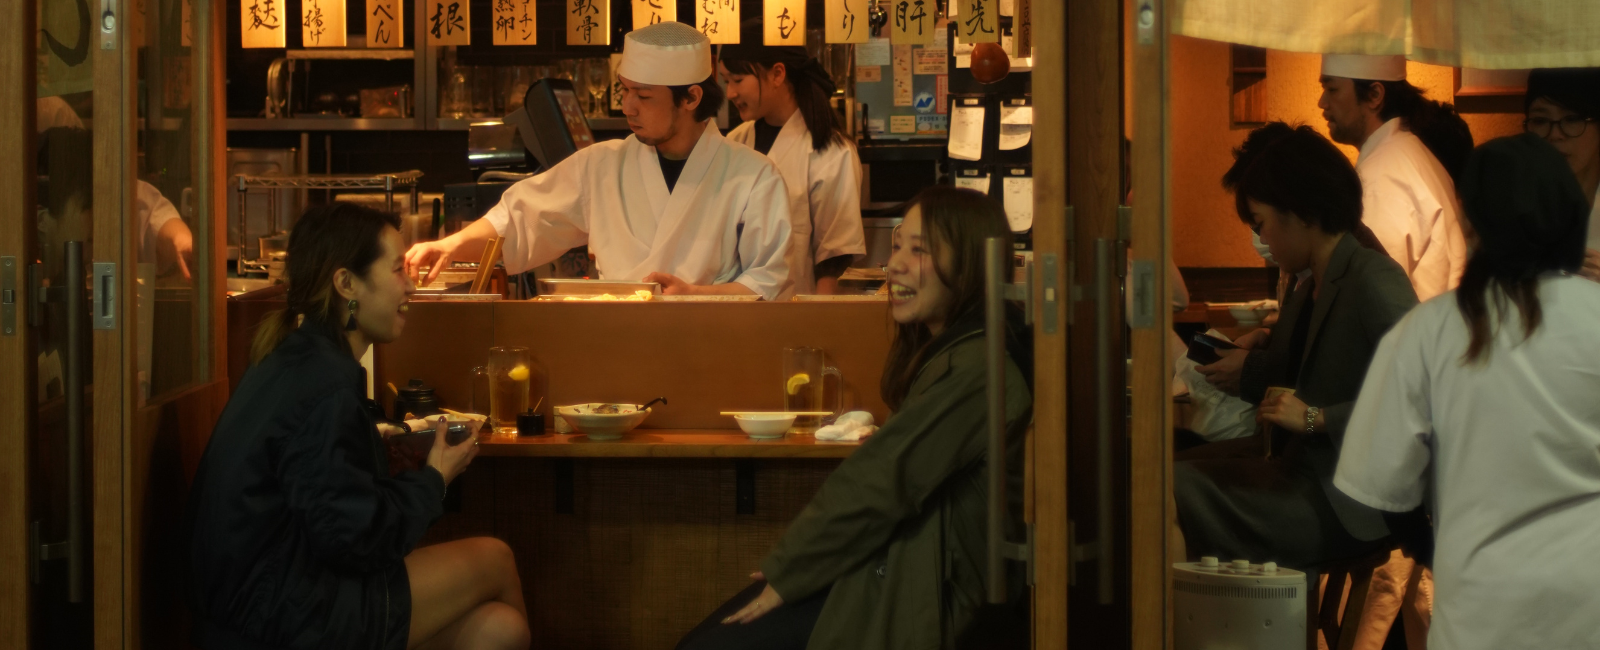 Ramen restaurant in Tokyo